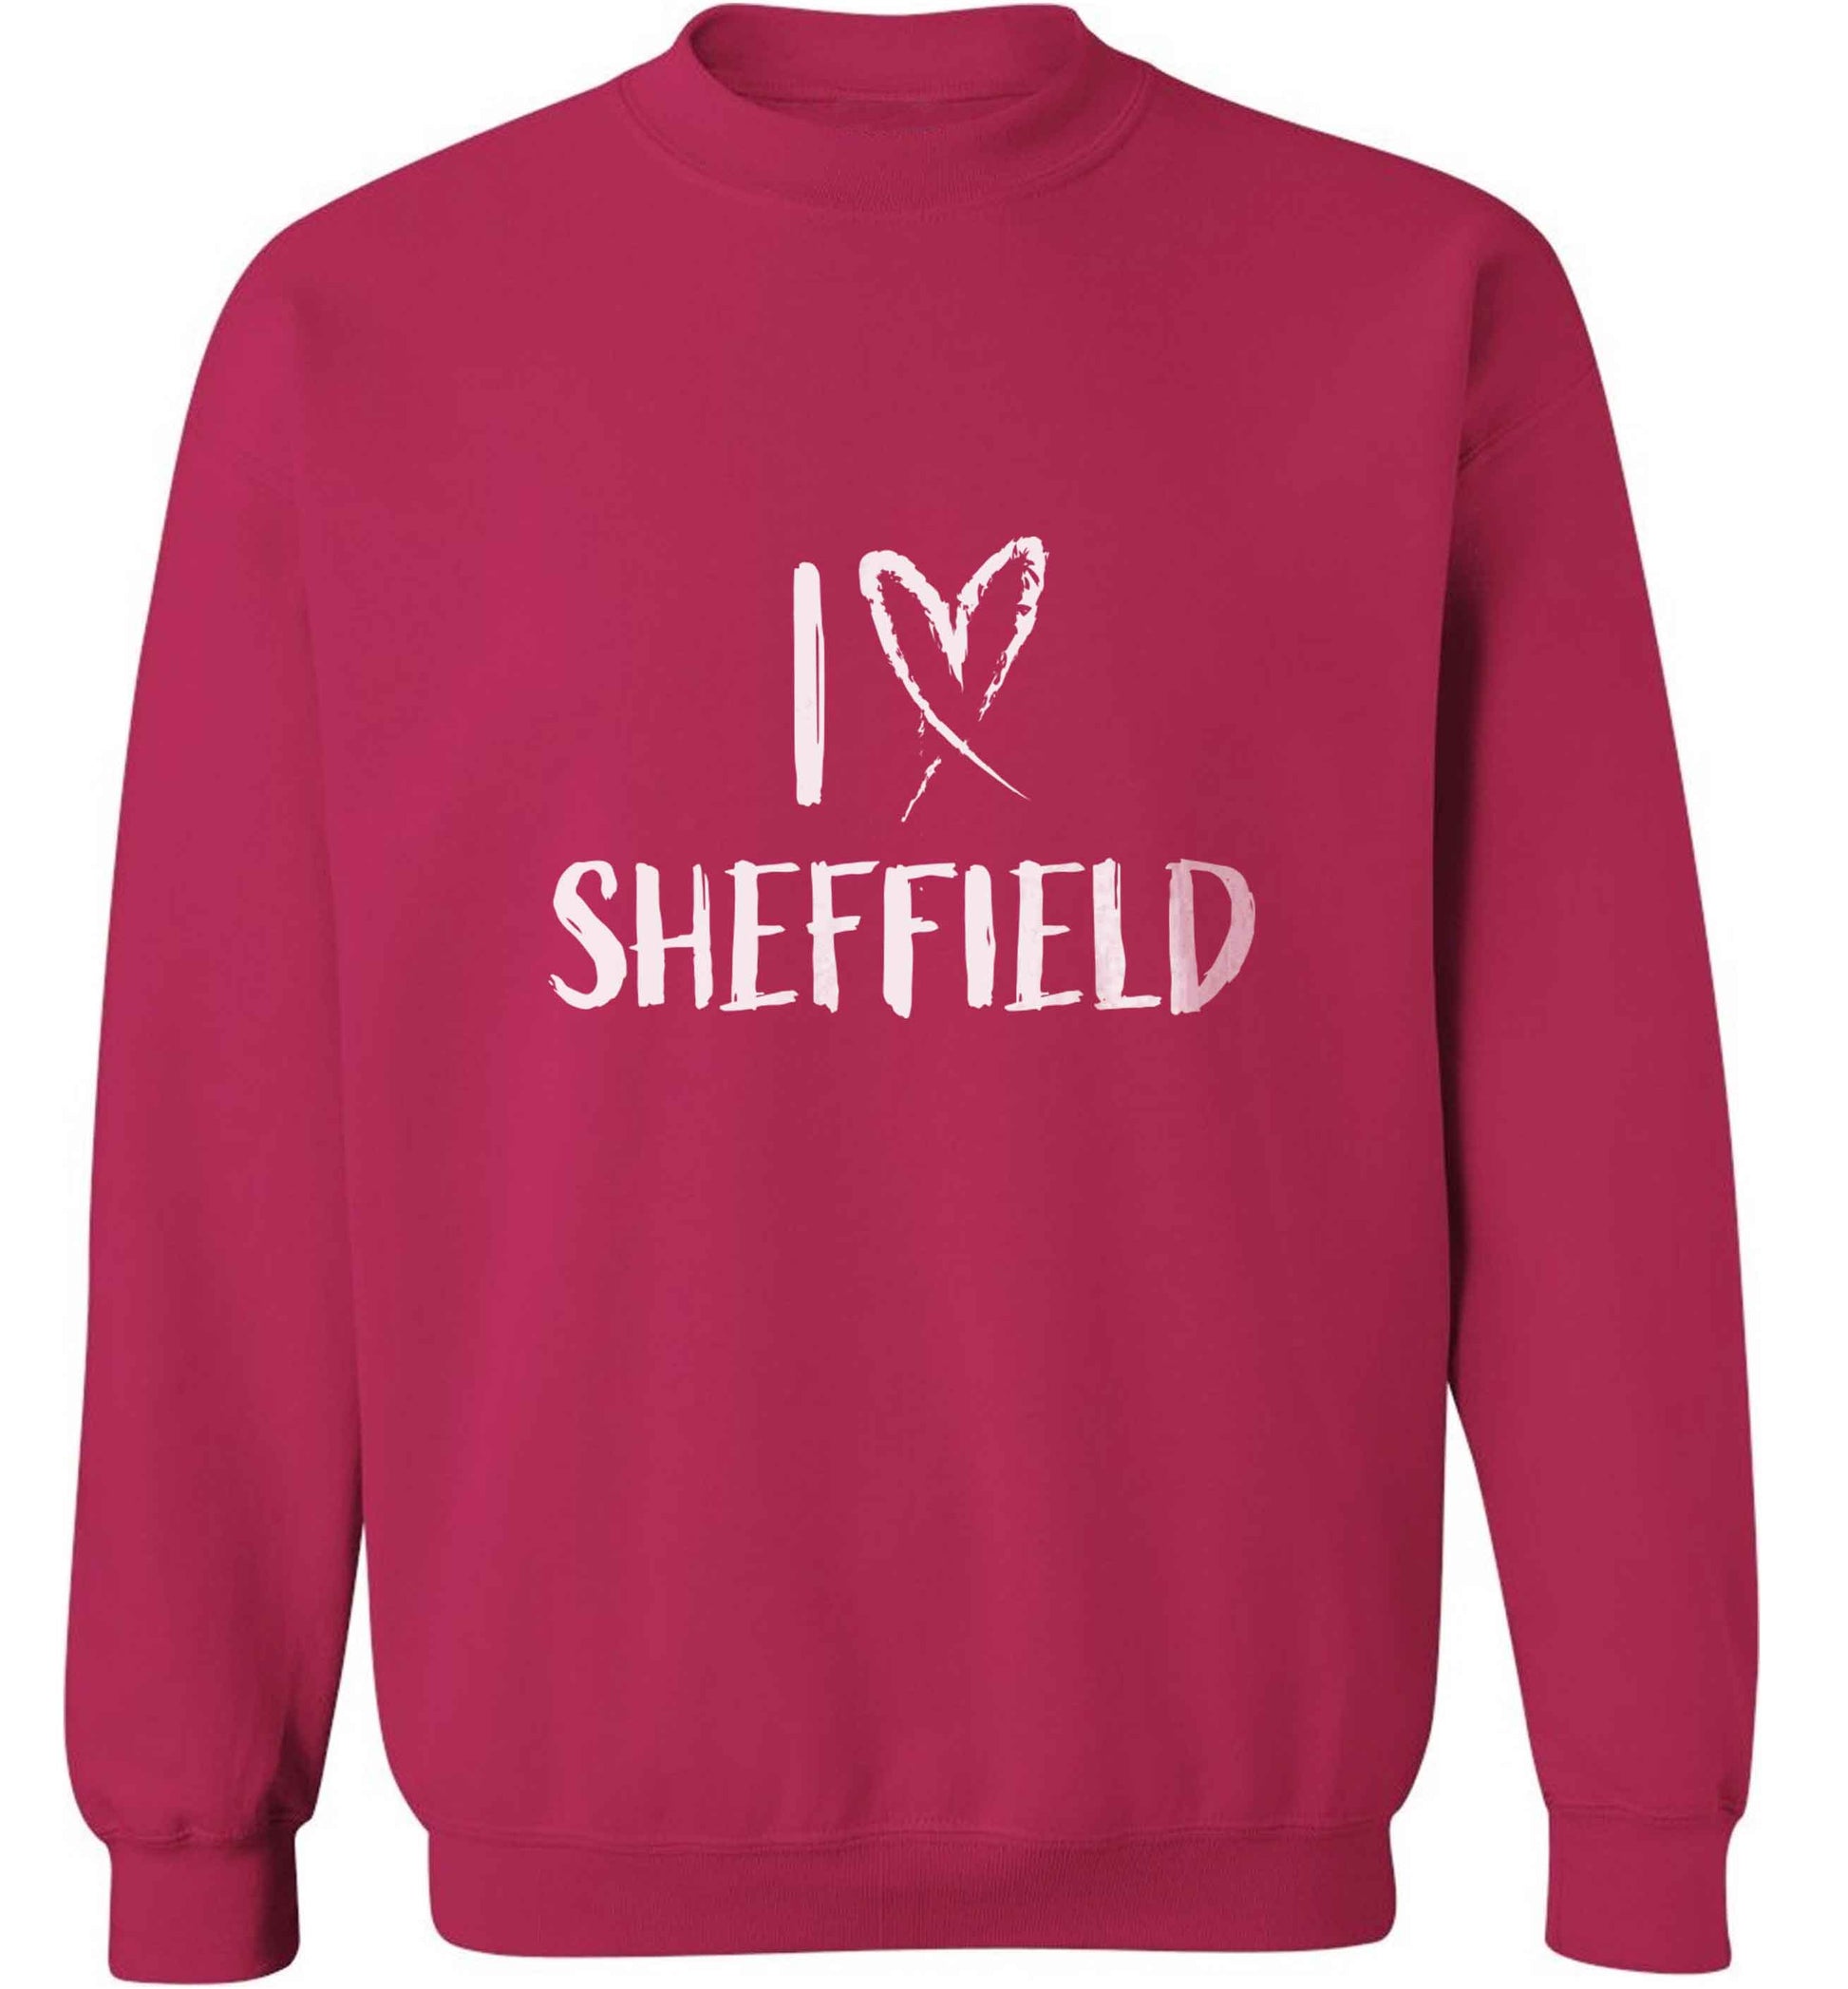 I love Sheffield adult's unisex pink sweater 2XL